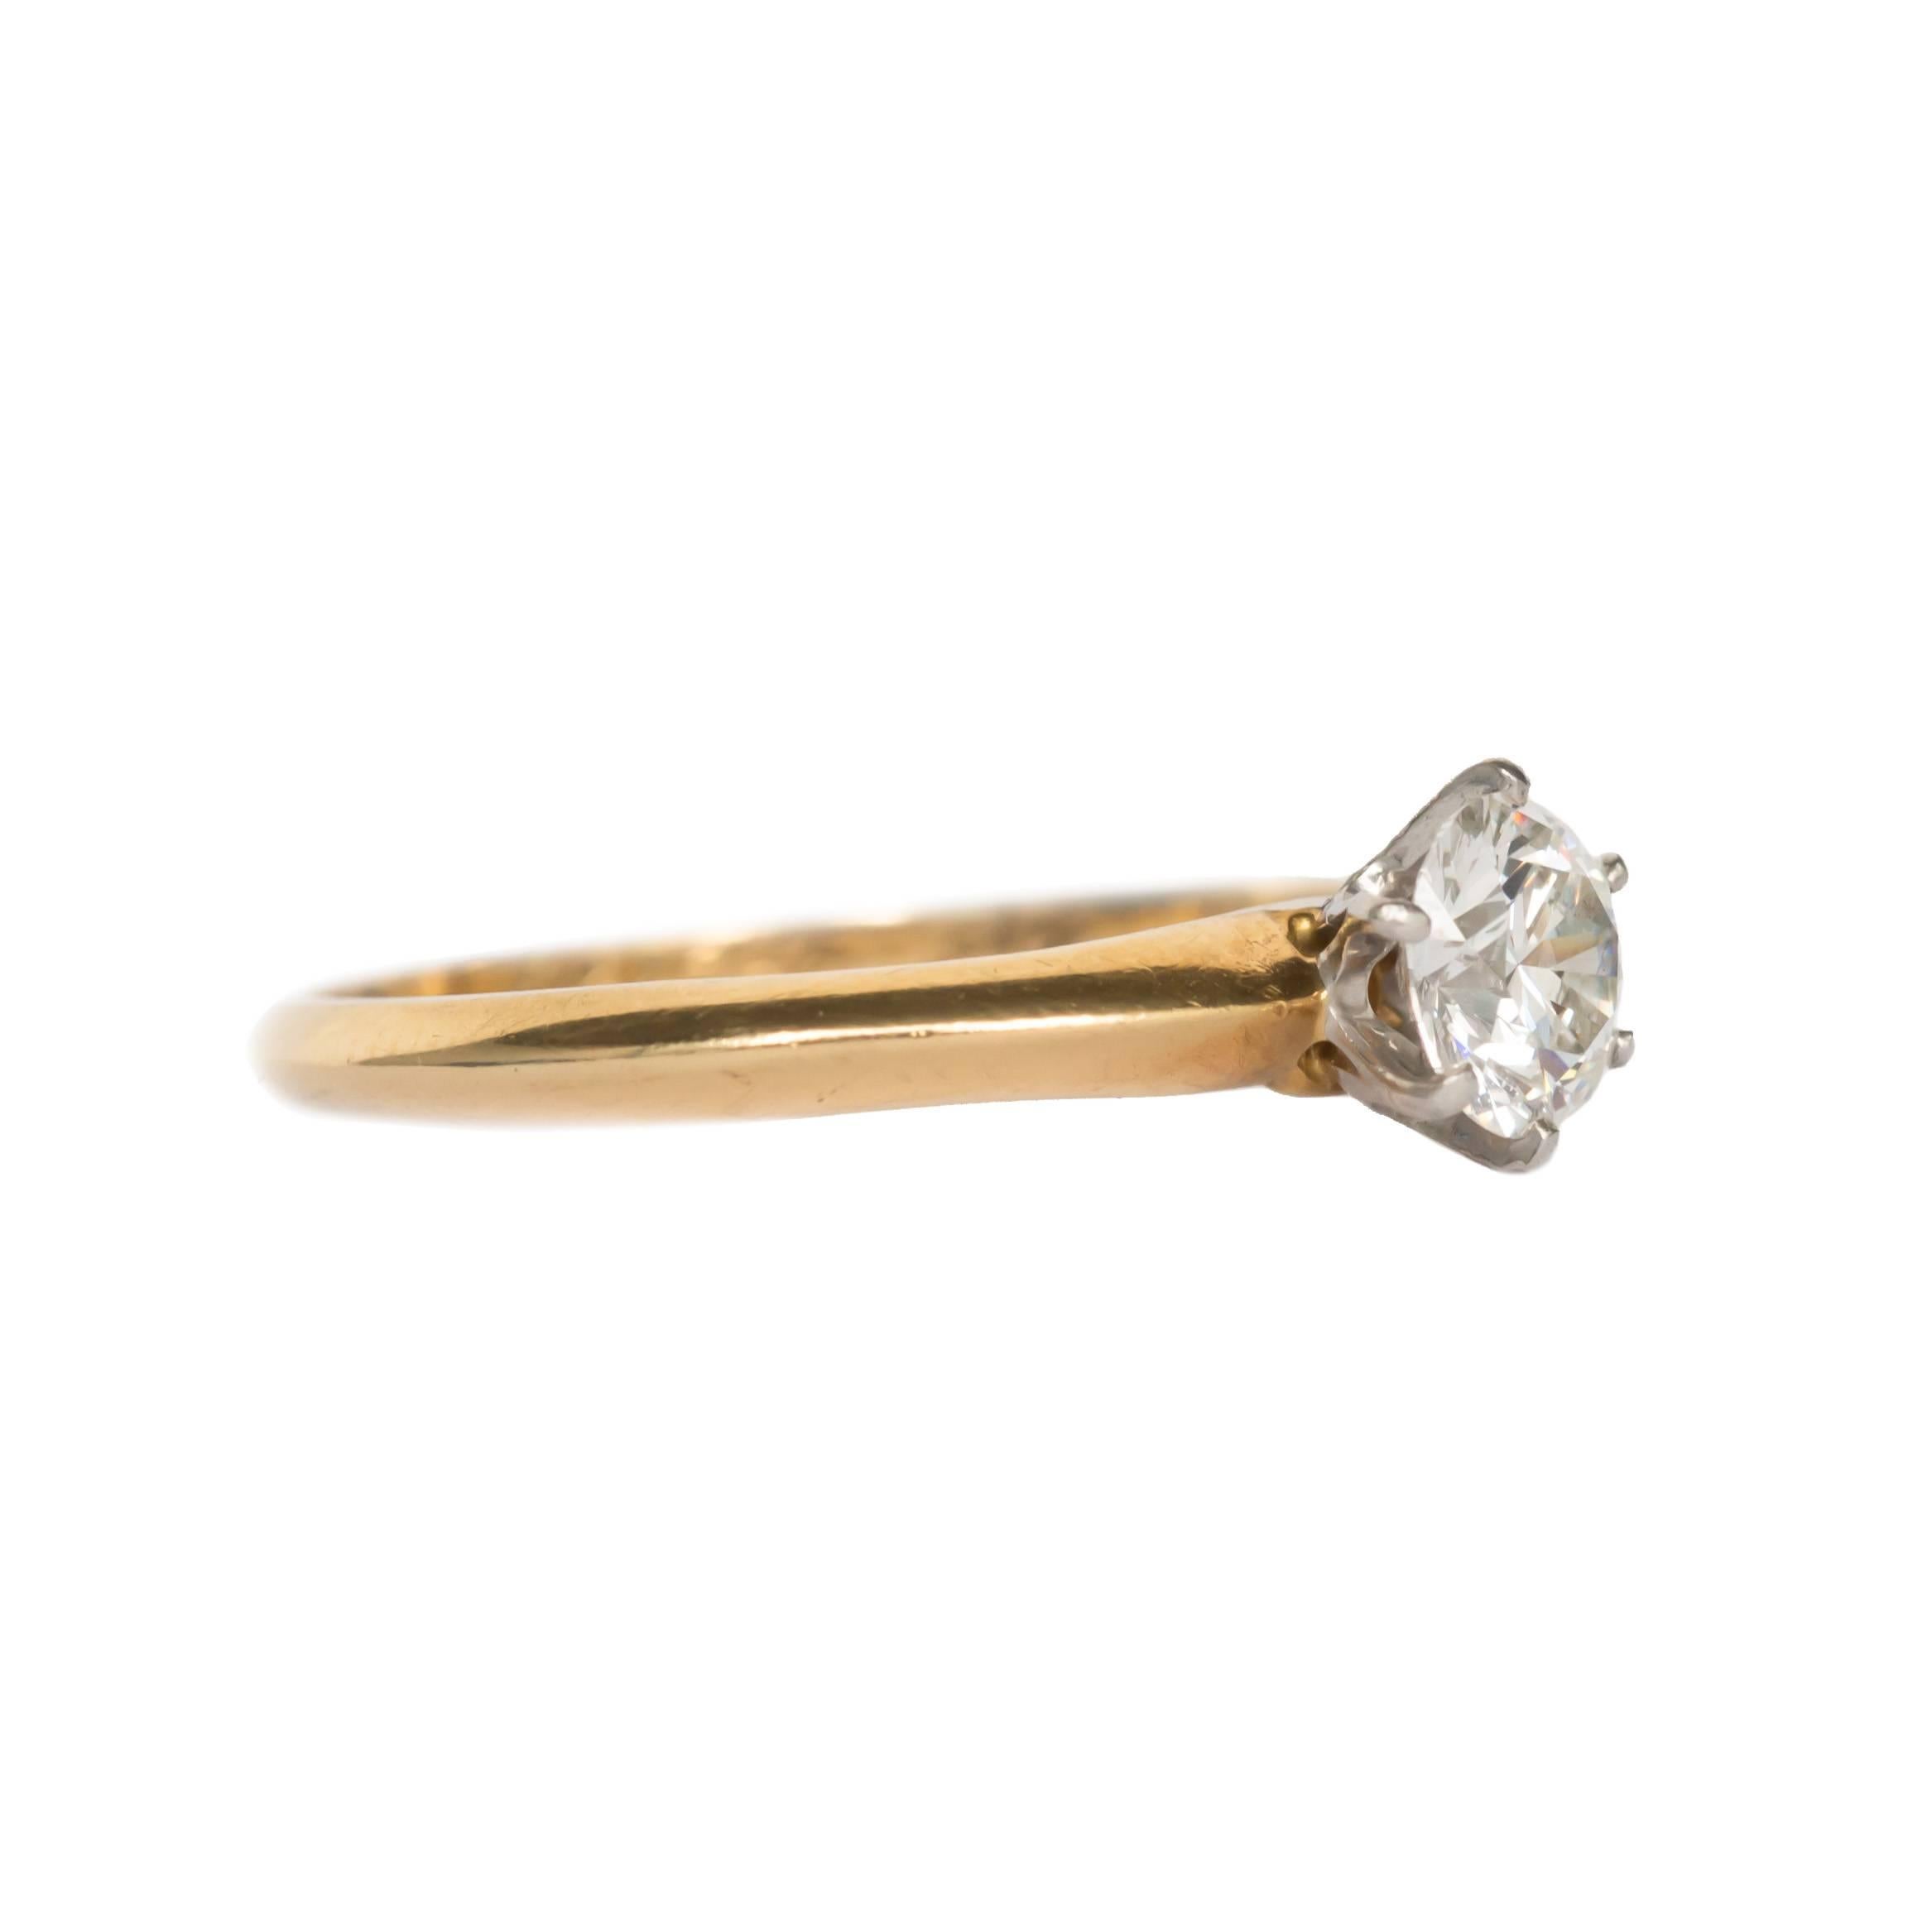 56 carat diamond ring